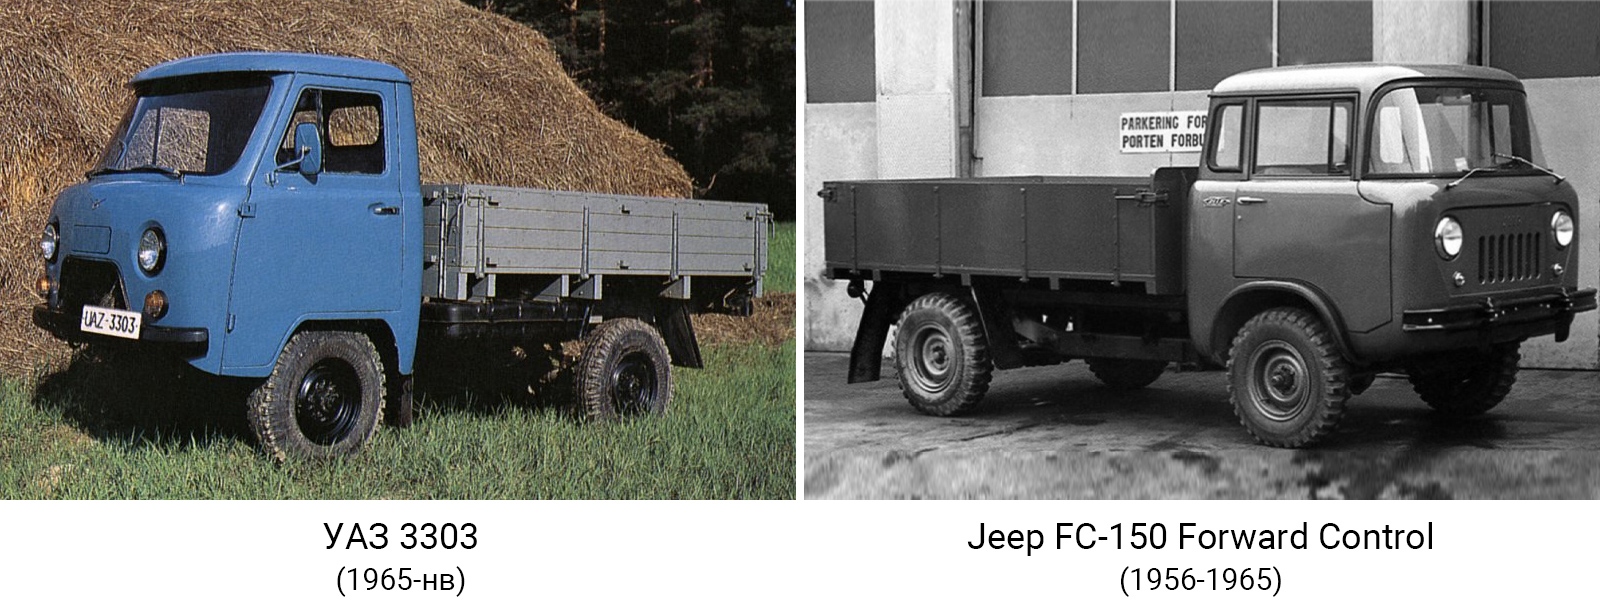 УАЗ 3303 и Jeep FC-150